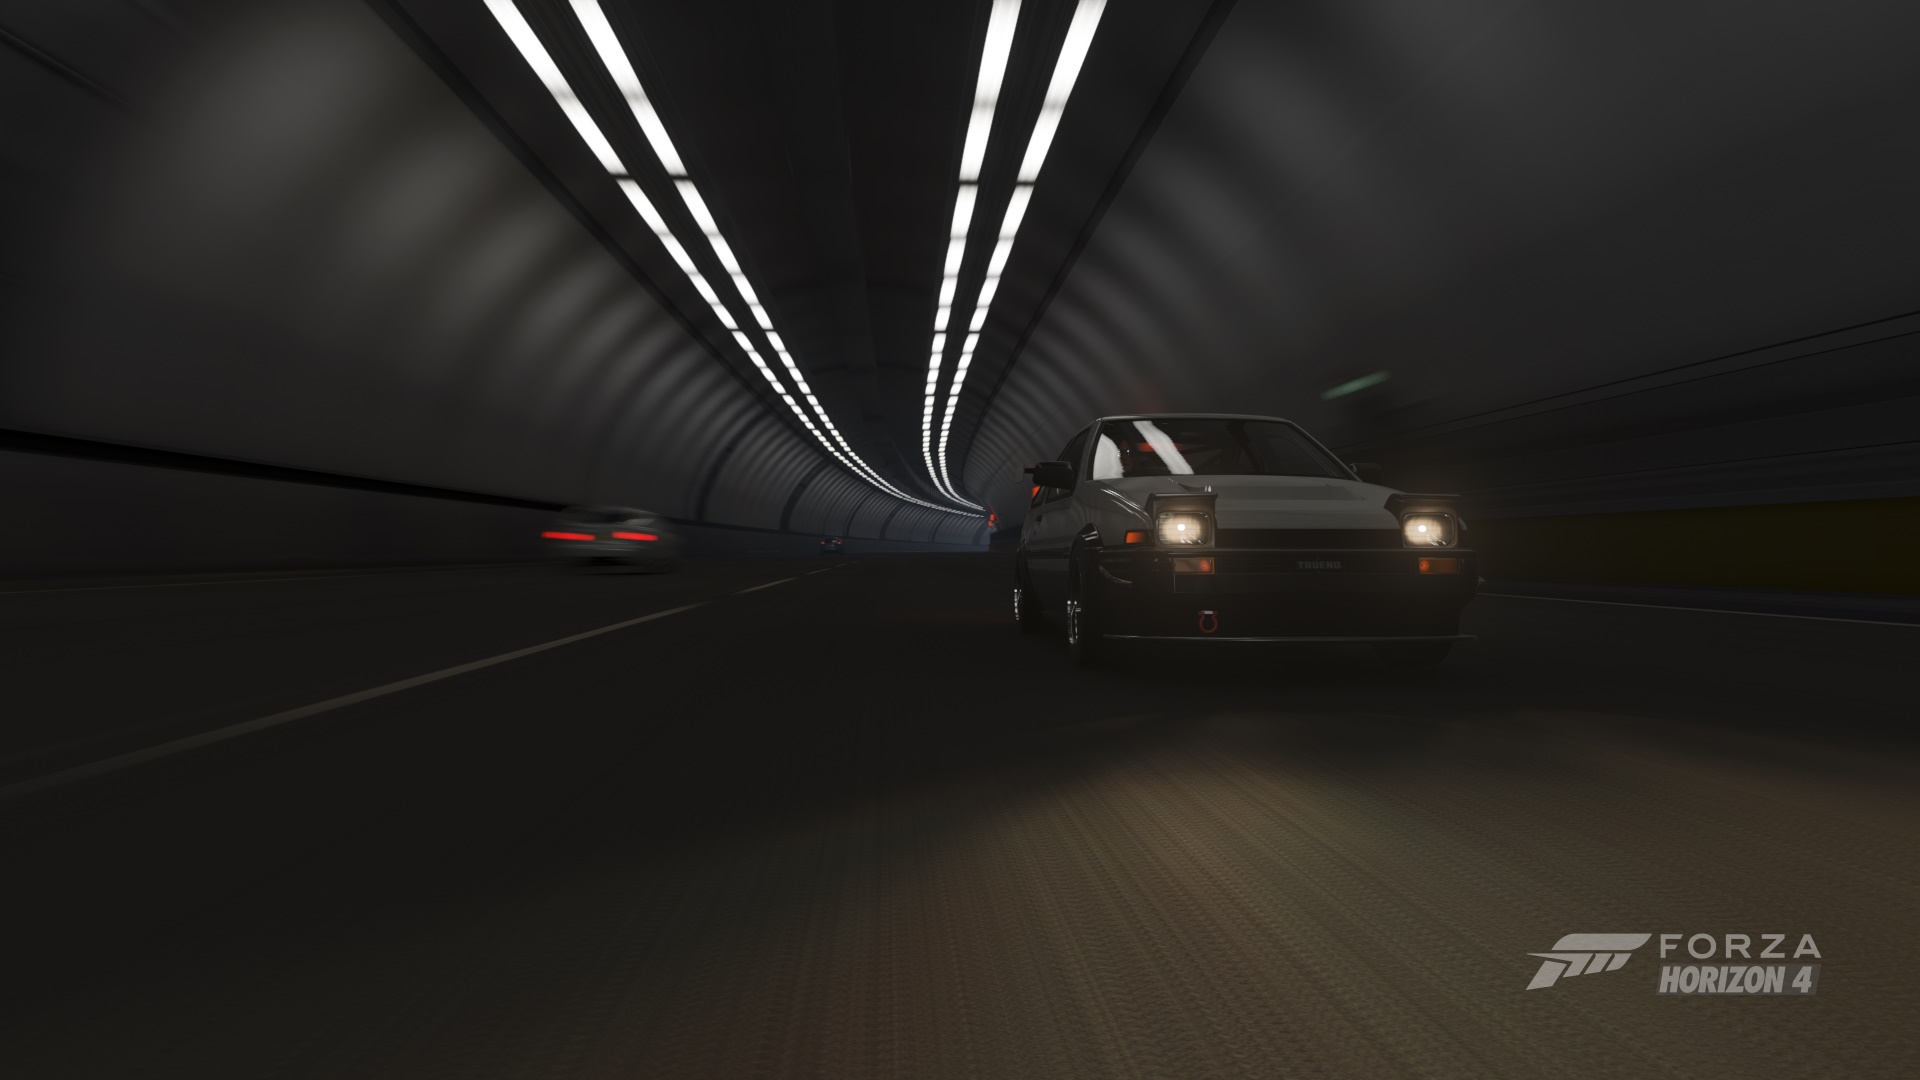 Forza Car BMW Toyota Jaguar Car City Night Tunnel Sparks Forza Horizon 4 1920x1080